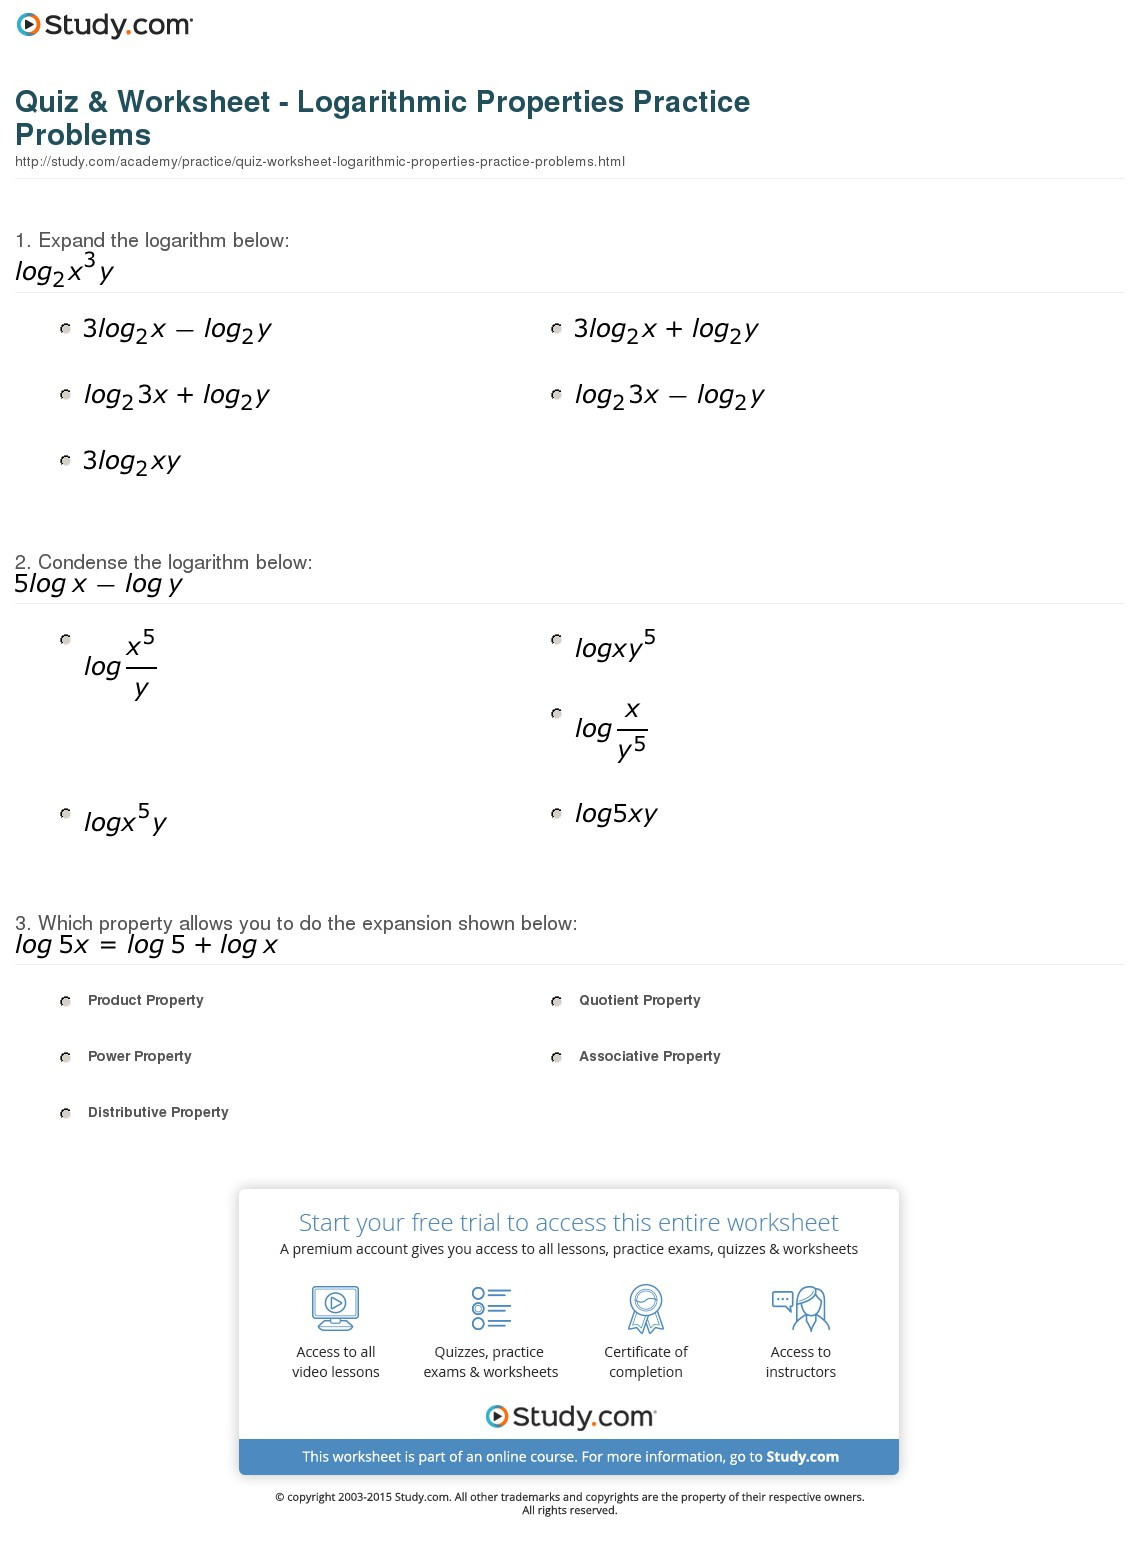 Properties Of Logarithms Worksheet | db-excel.com